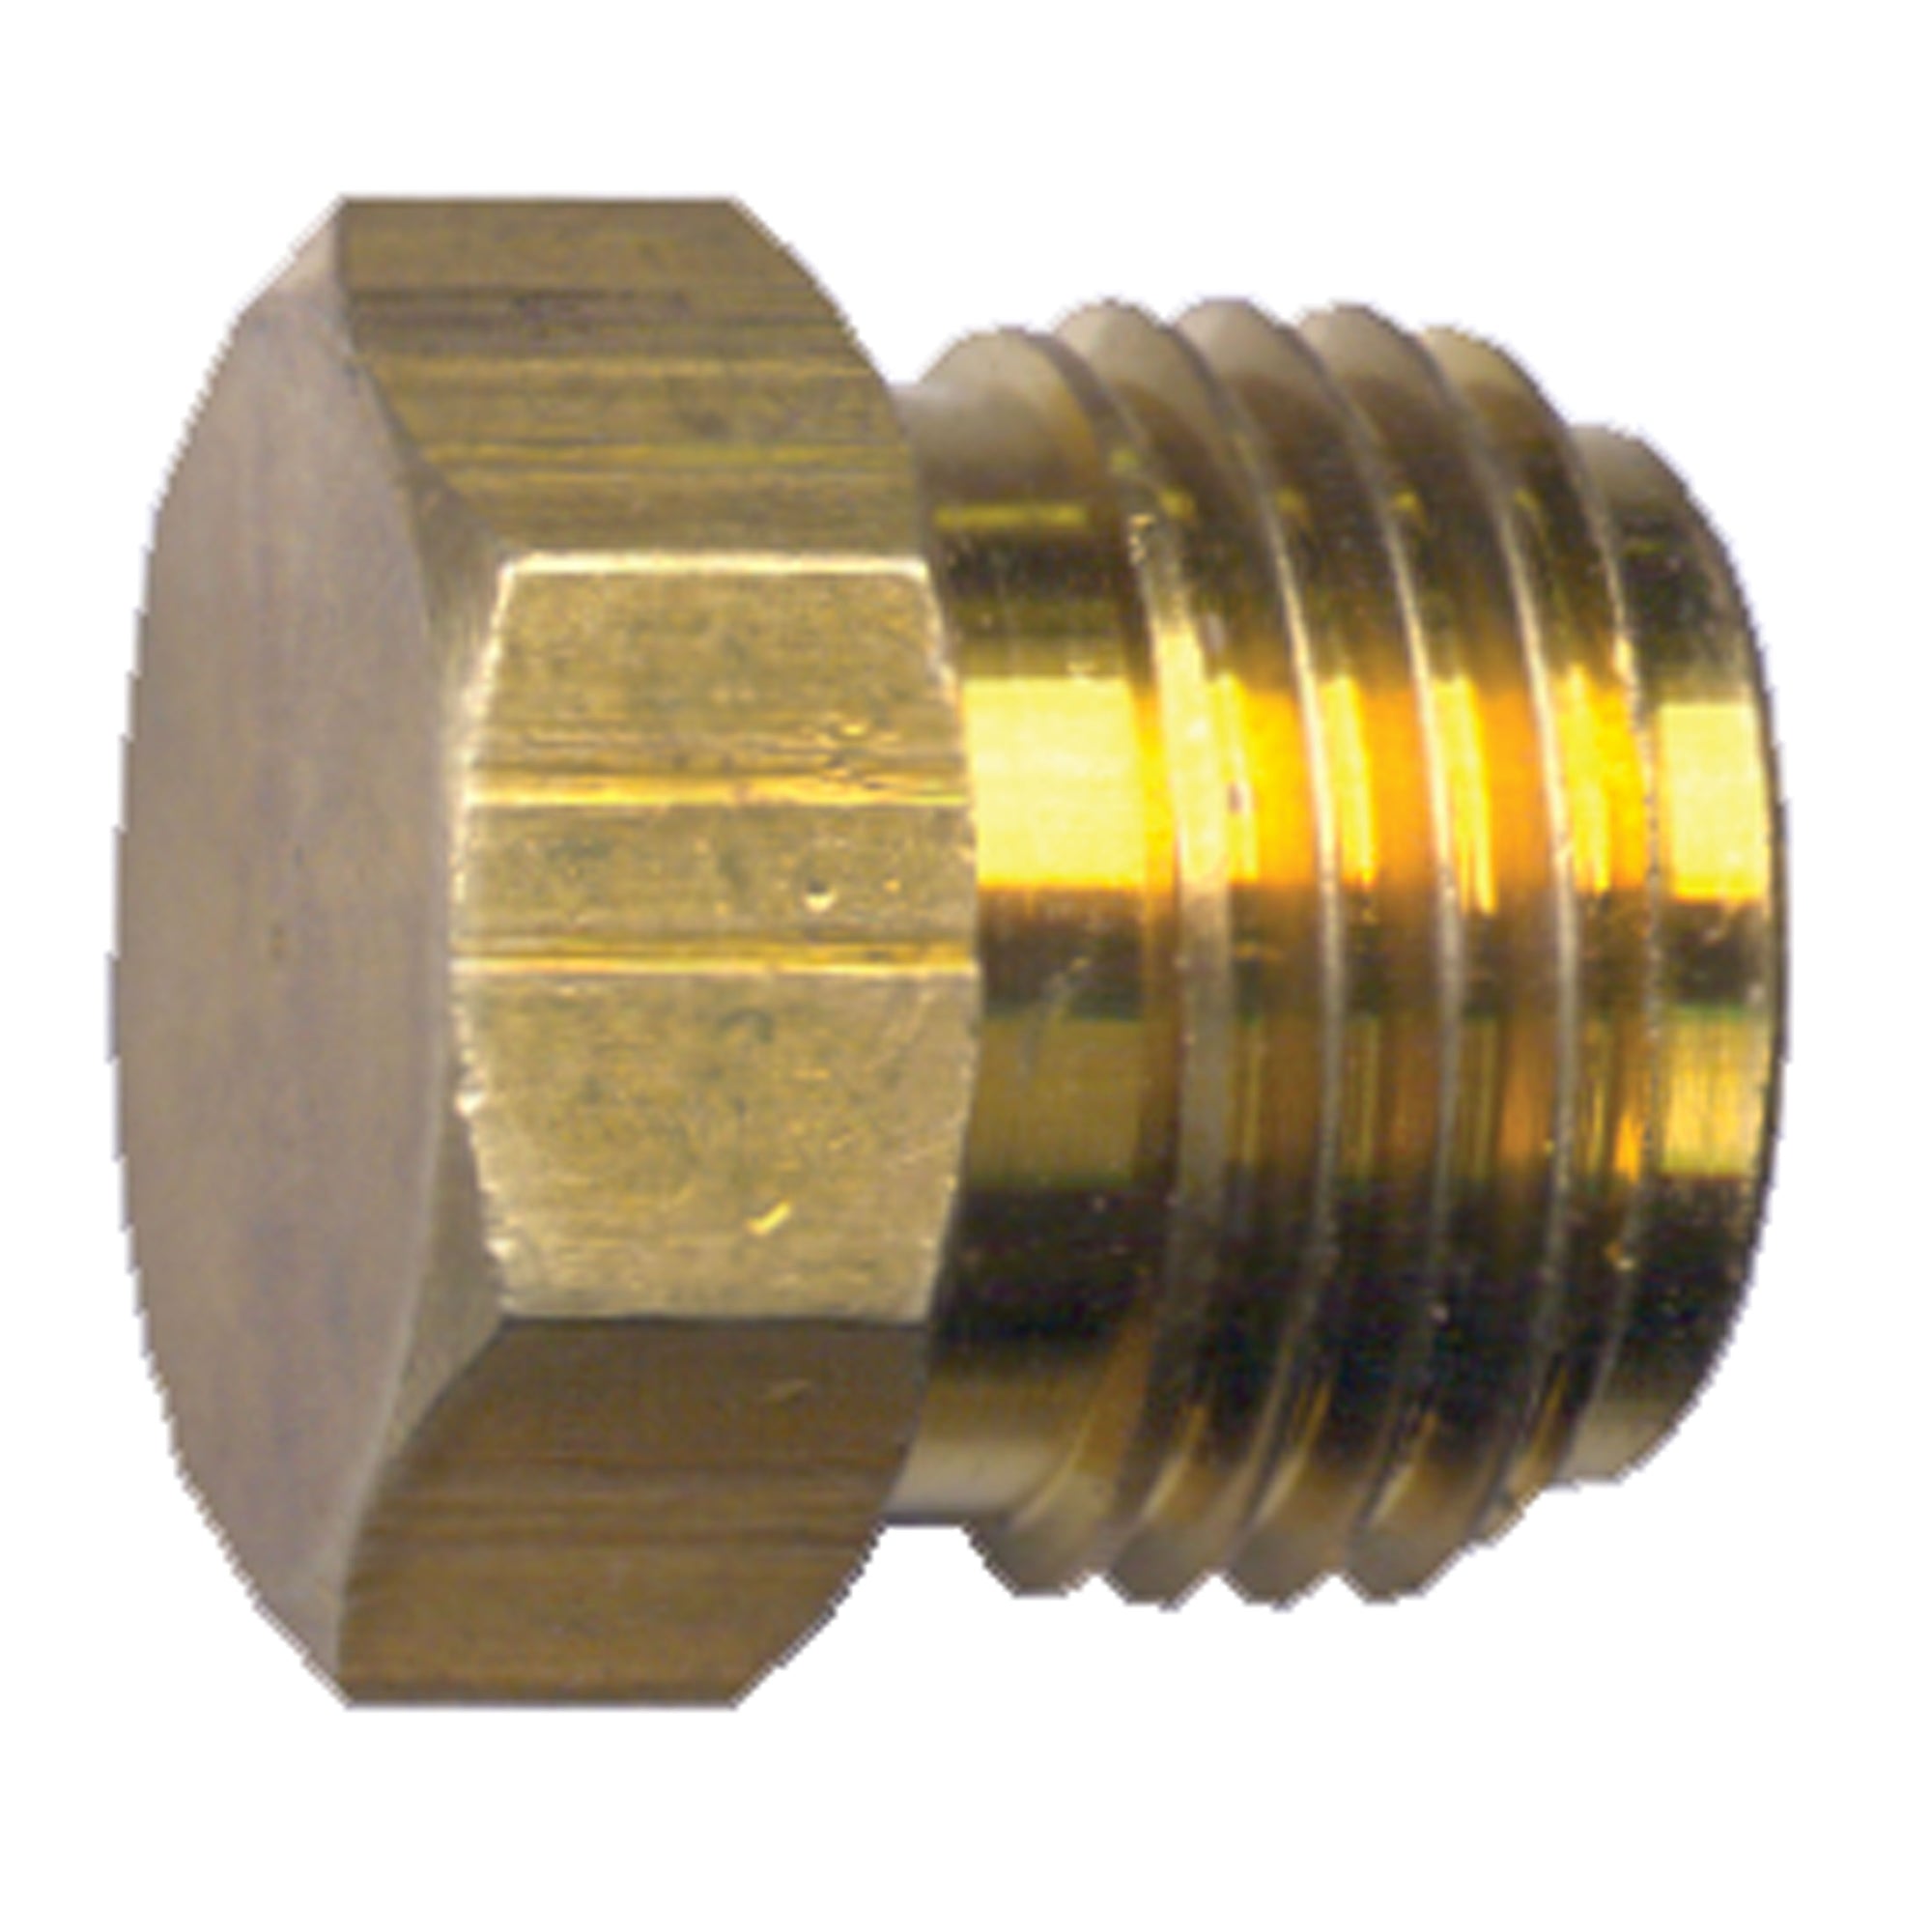 JR Products 07-30425 Sealing Plug - 1/4"